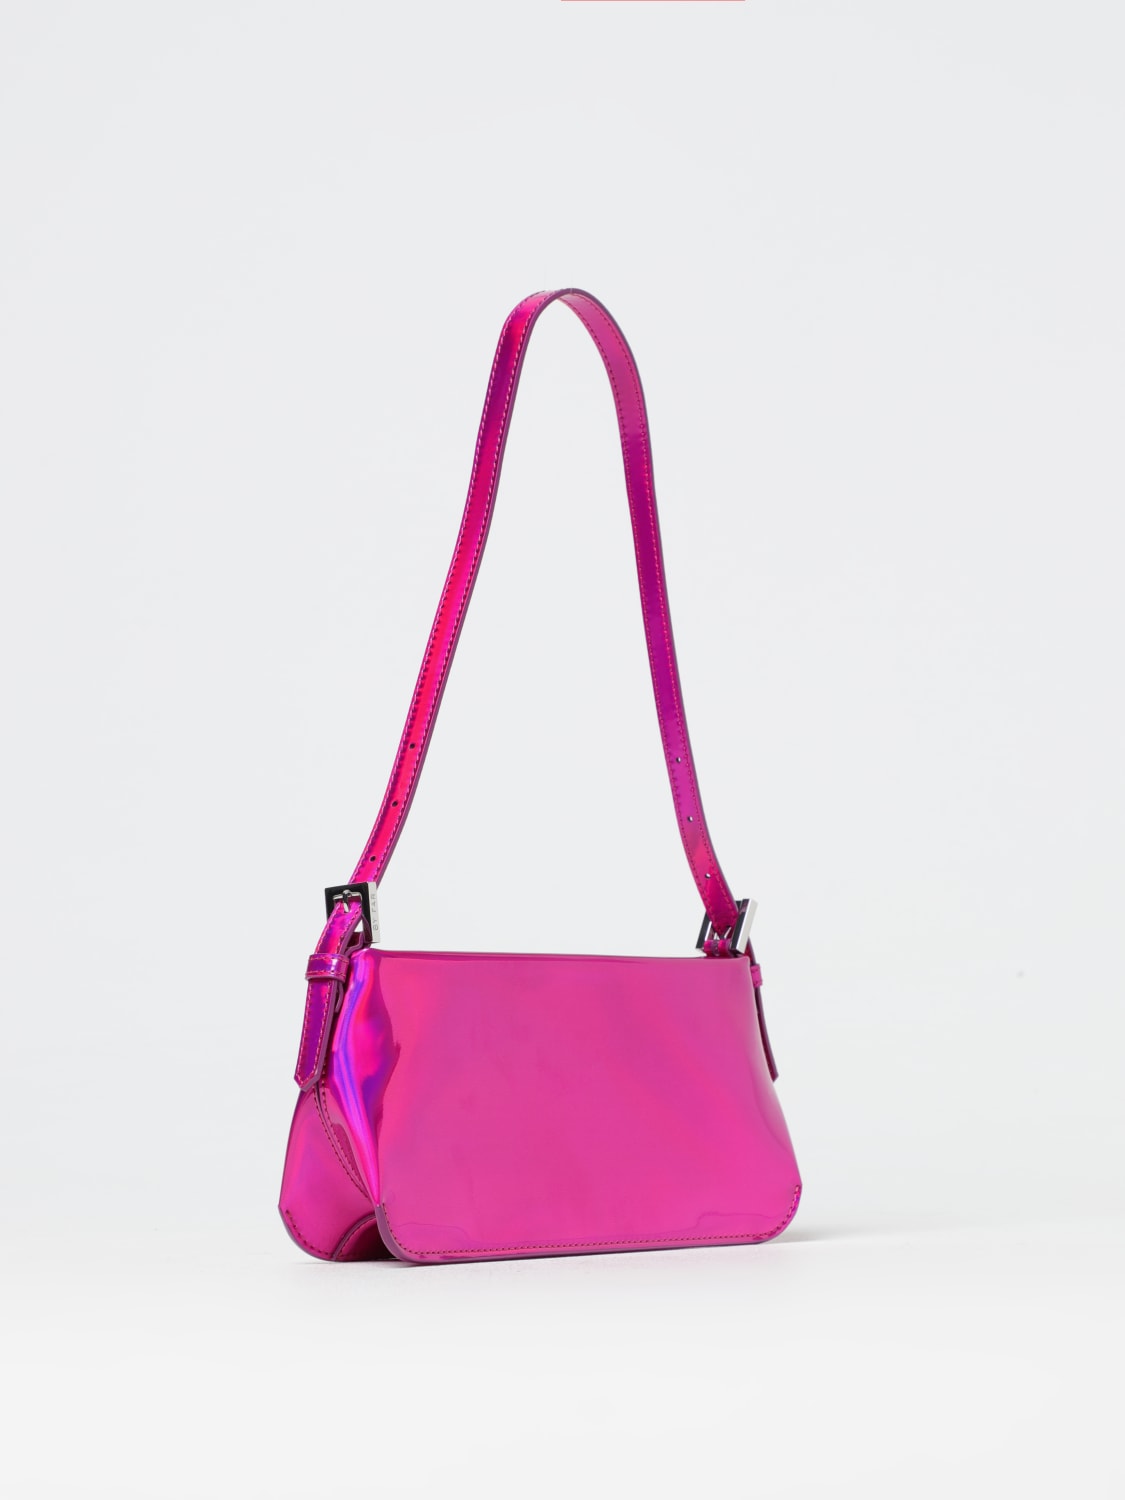 Shein bright red small clutch handbag purse with strap